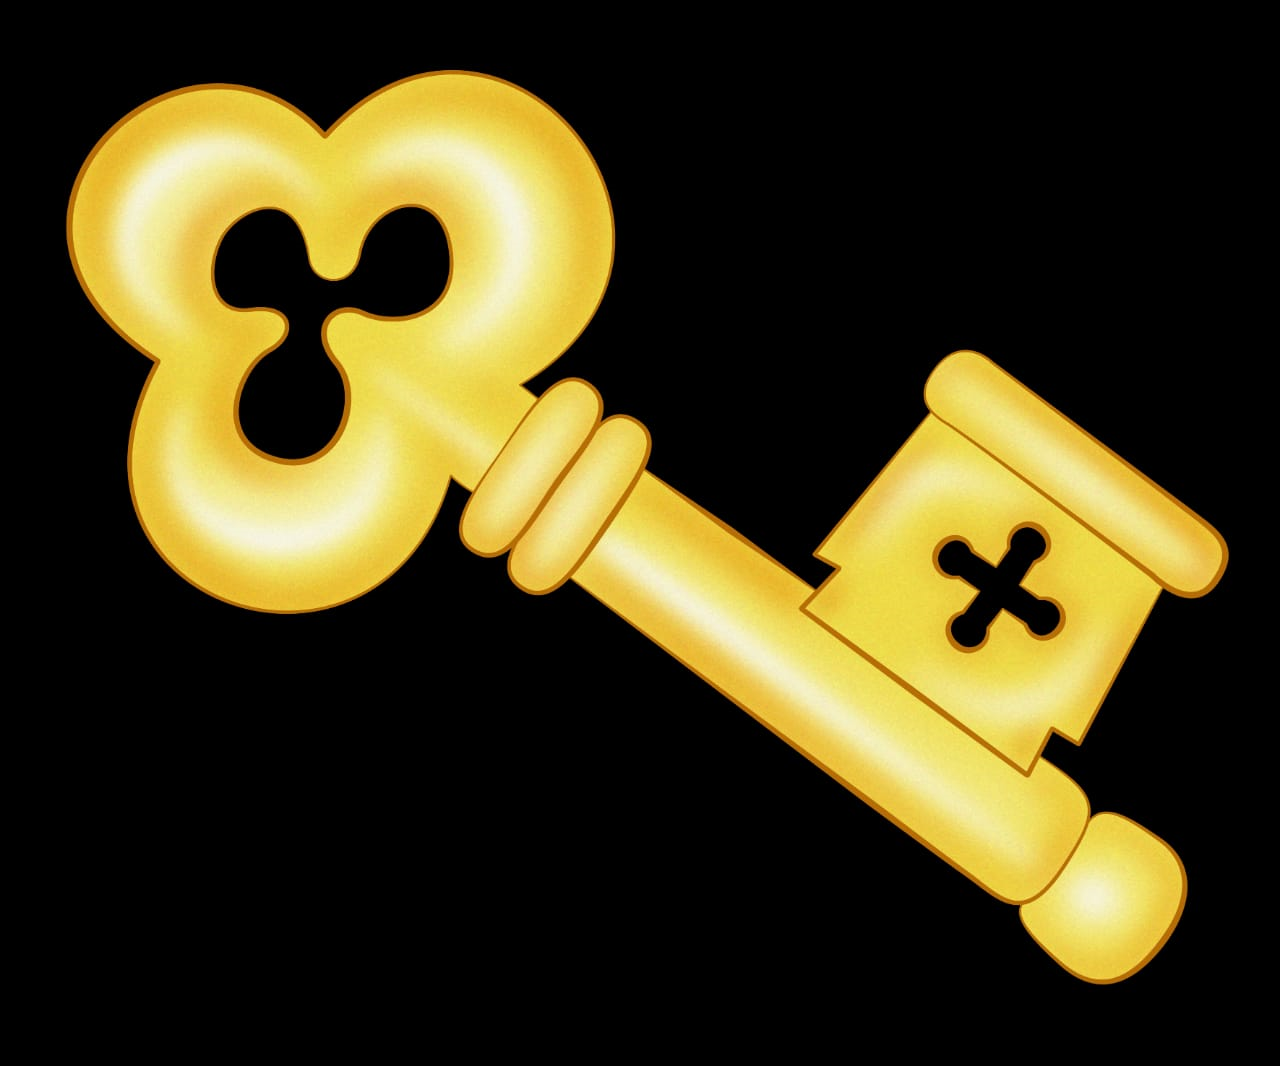 Покажи картинку ключ. Золотой ключик Буратино. Buratino золотой ключик. Золотой ключик Буратино ключ. Золотой ключ Буратино.